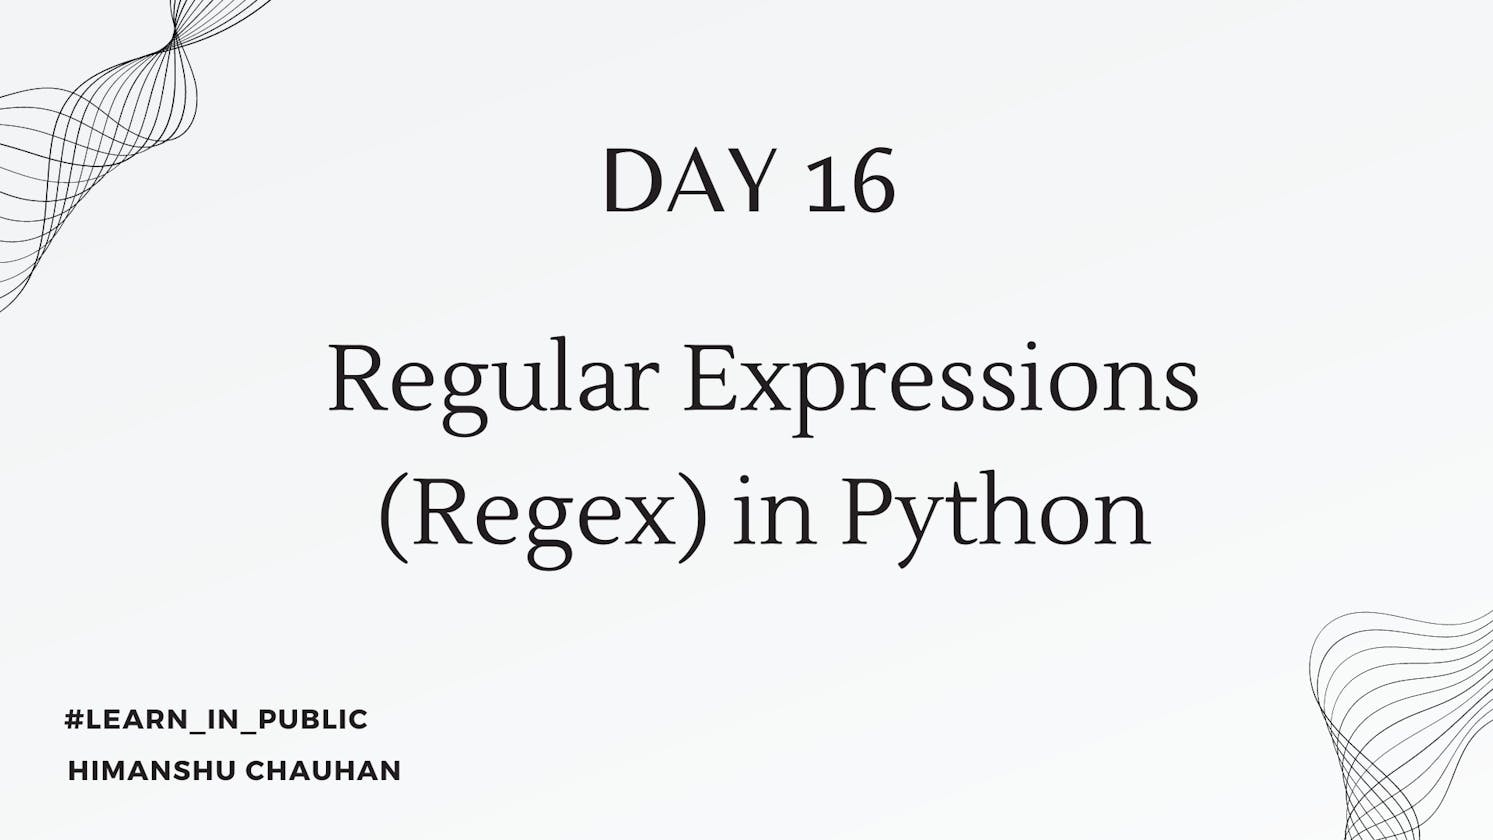 Day 16: Regular Expressions (Regex) in Python